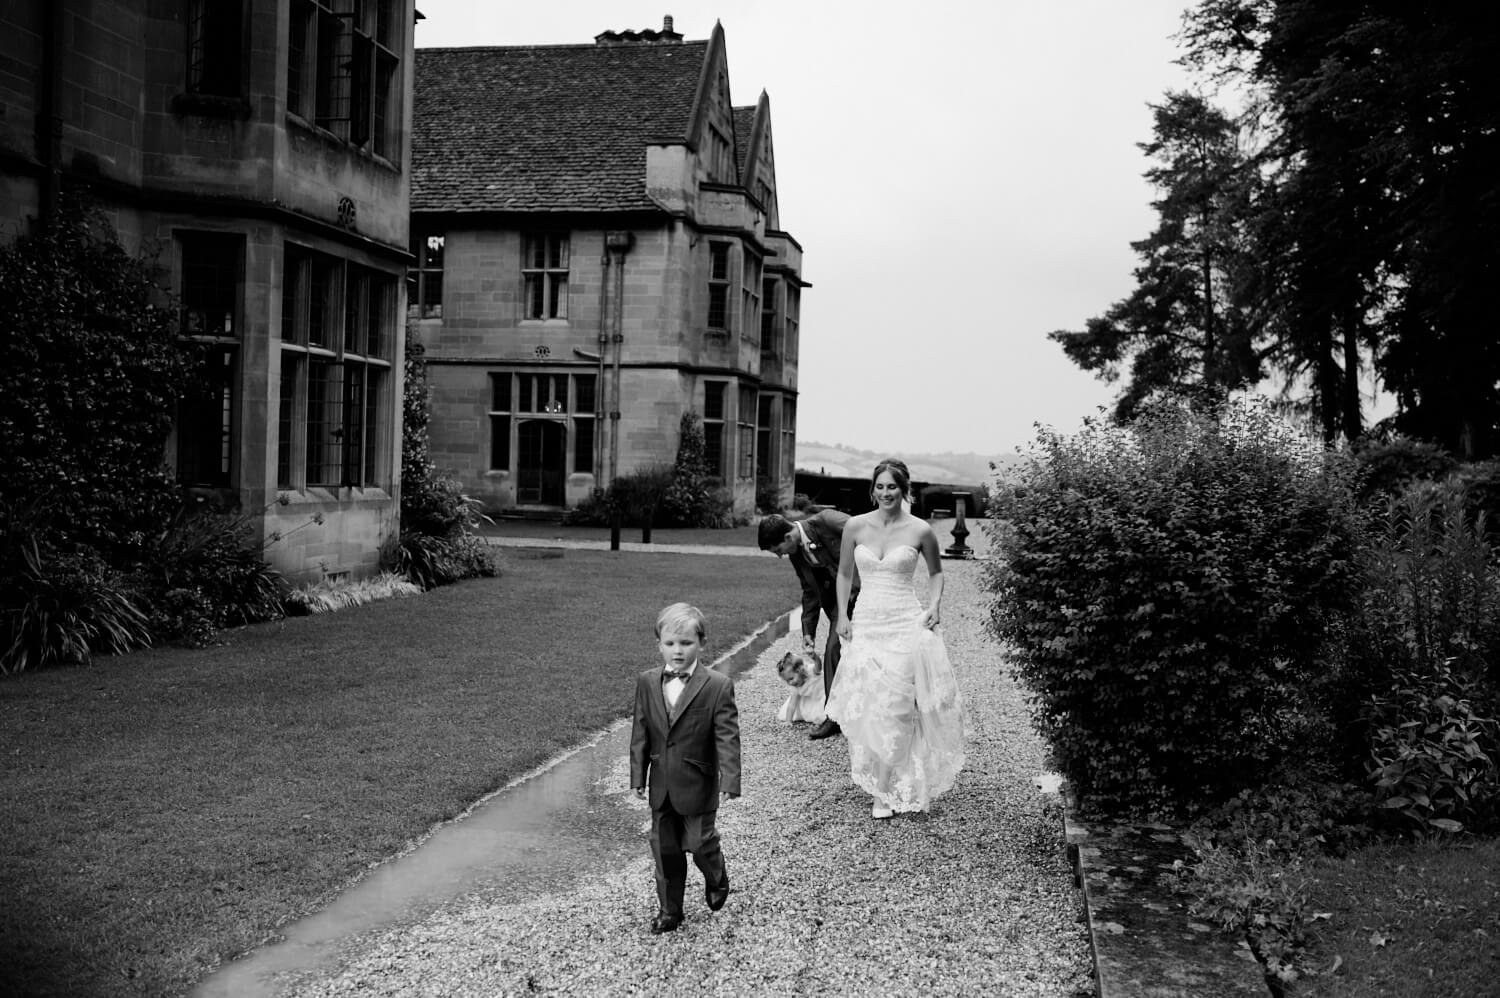 Coombe Lodge Wedding Photographer Somerset | Emily and George's wedding